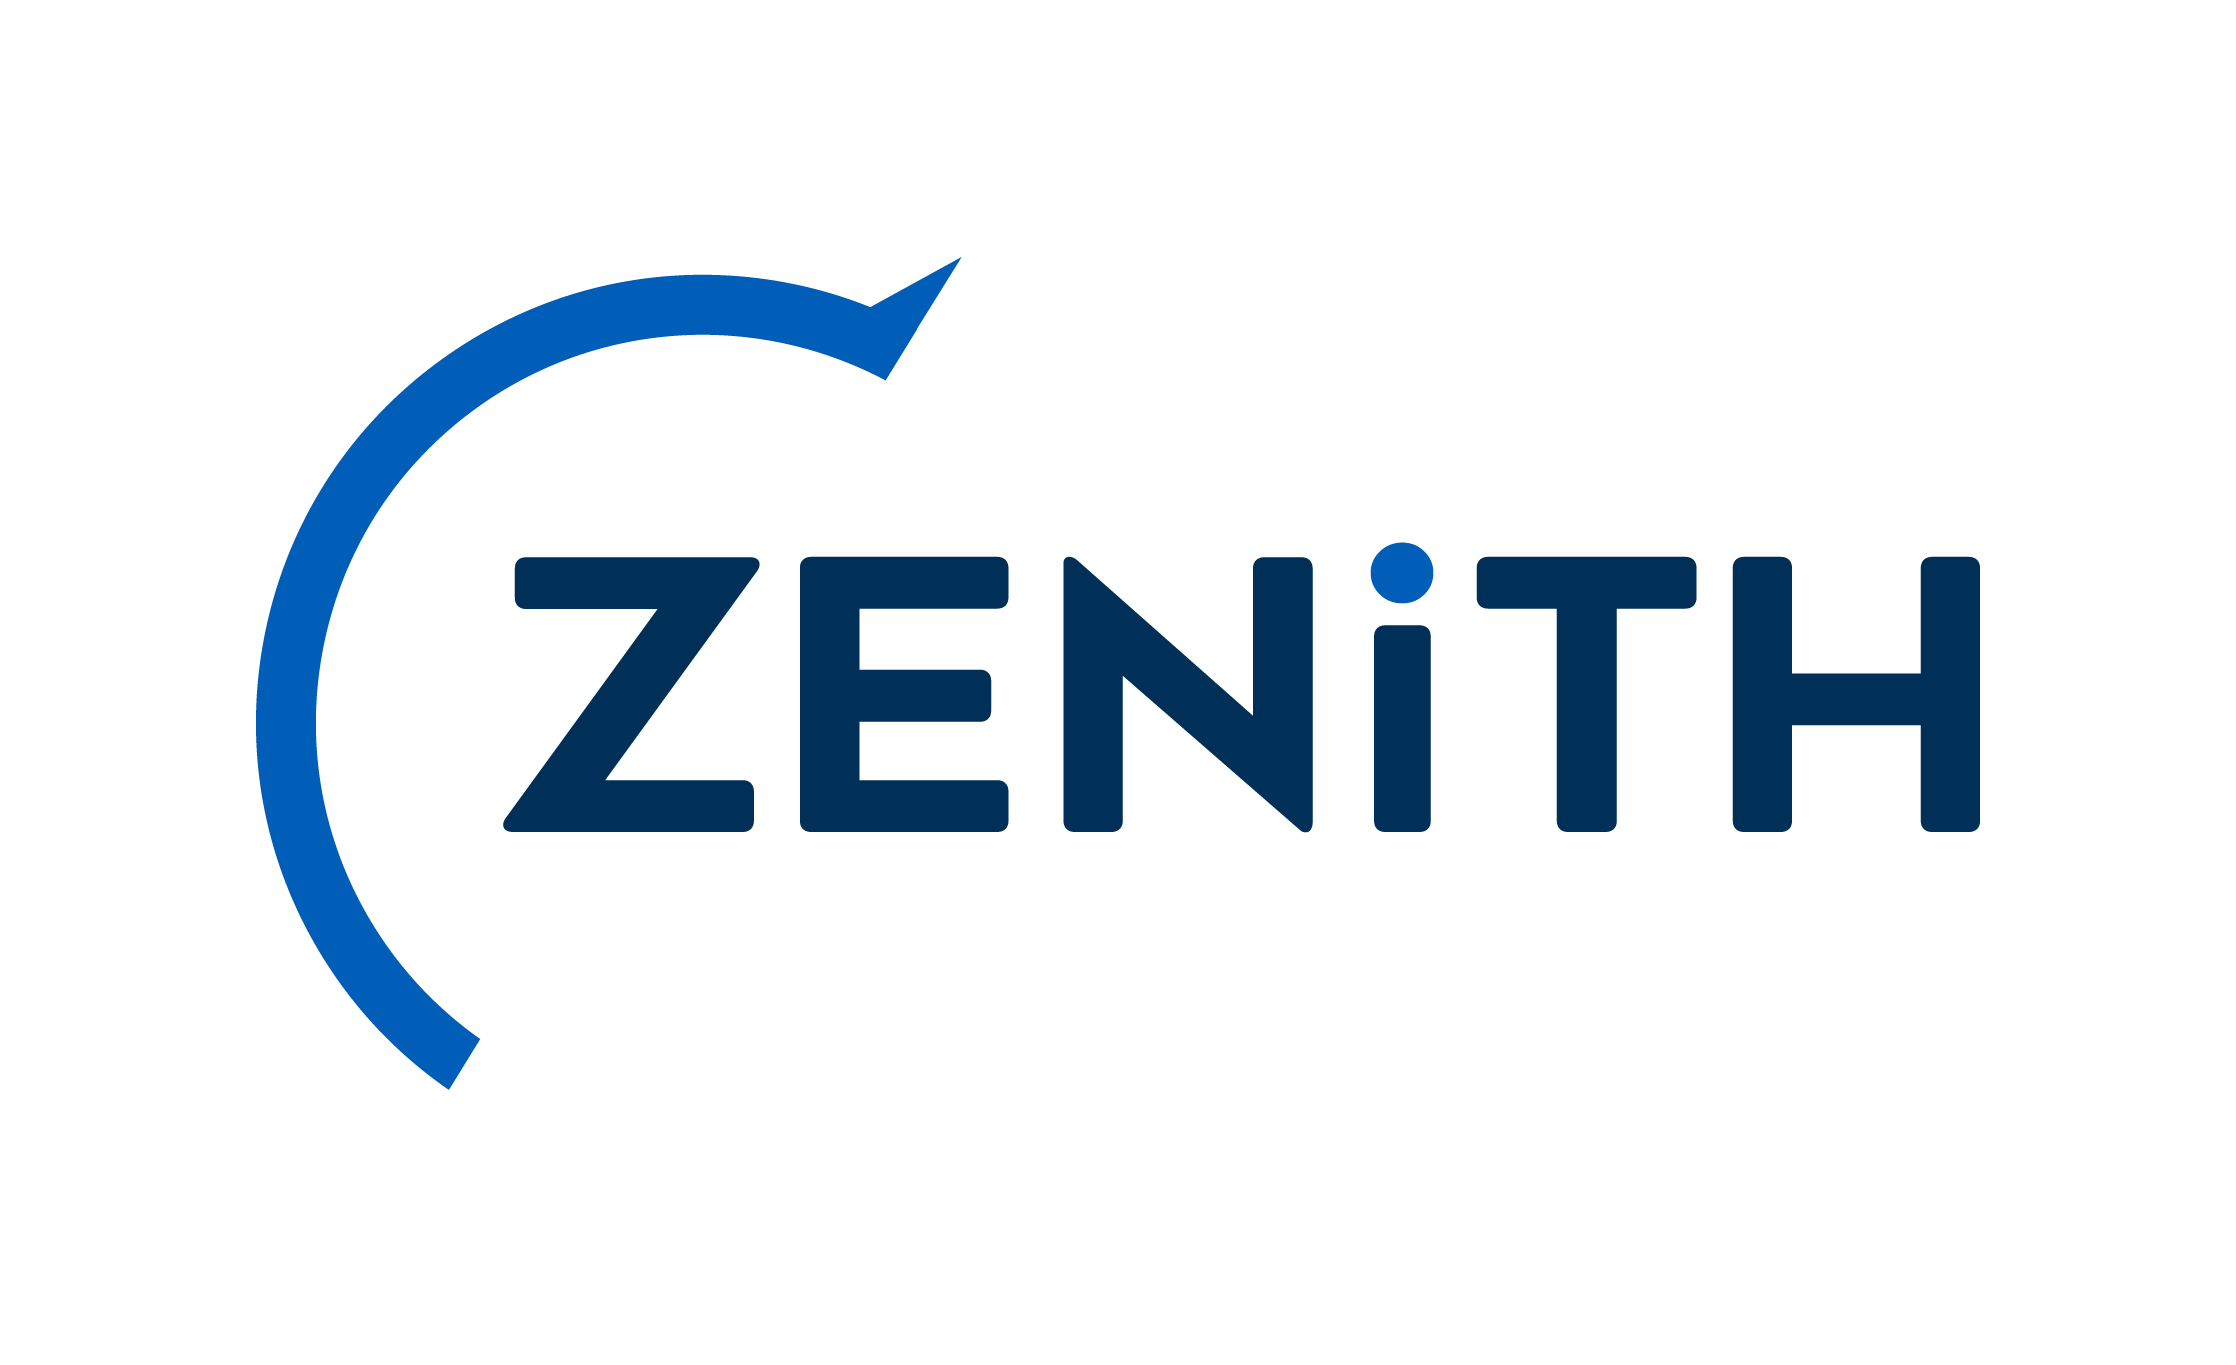 The ZENITH program